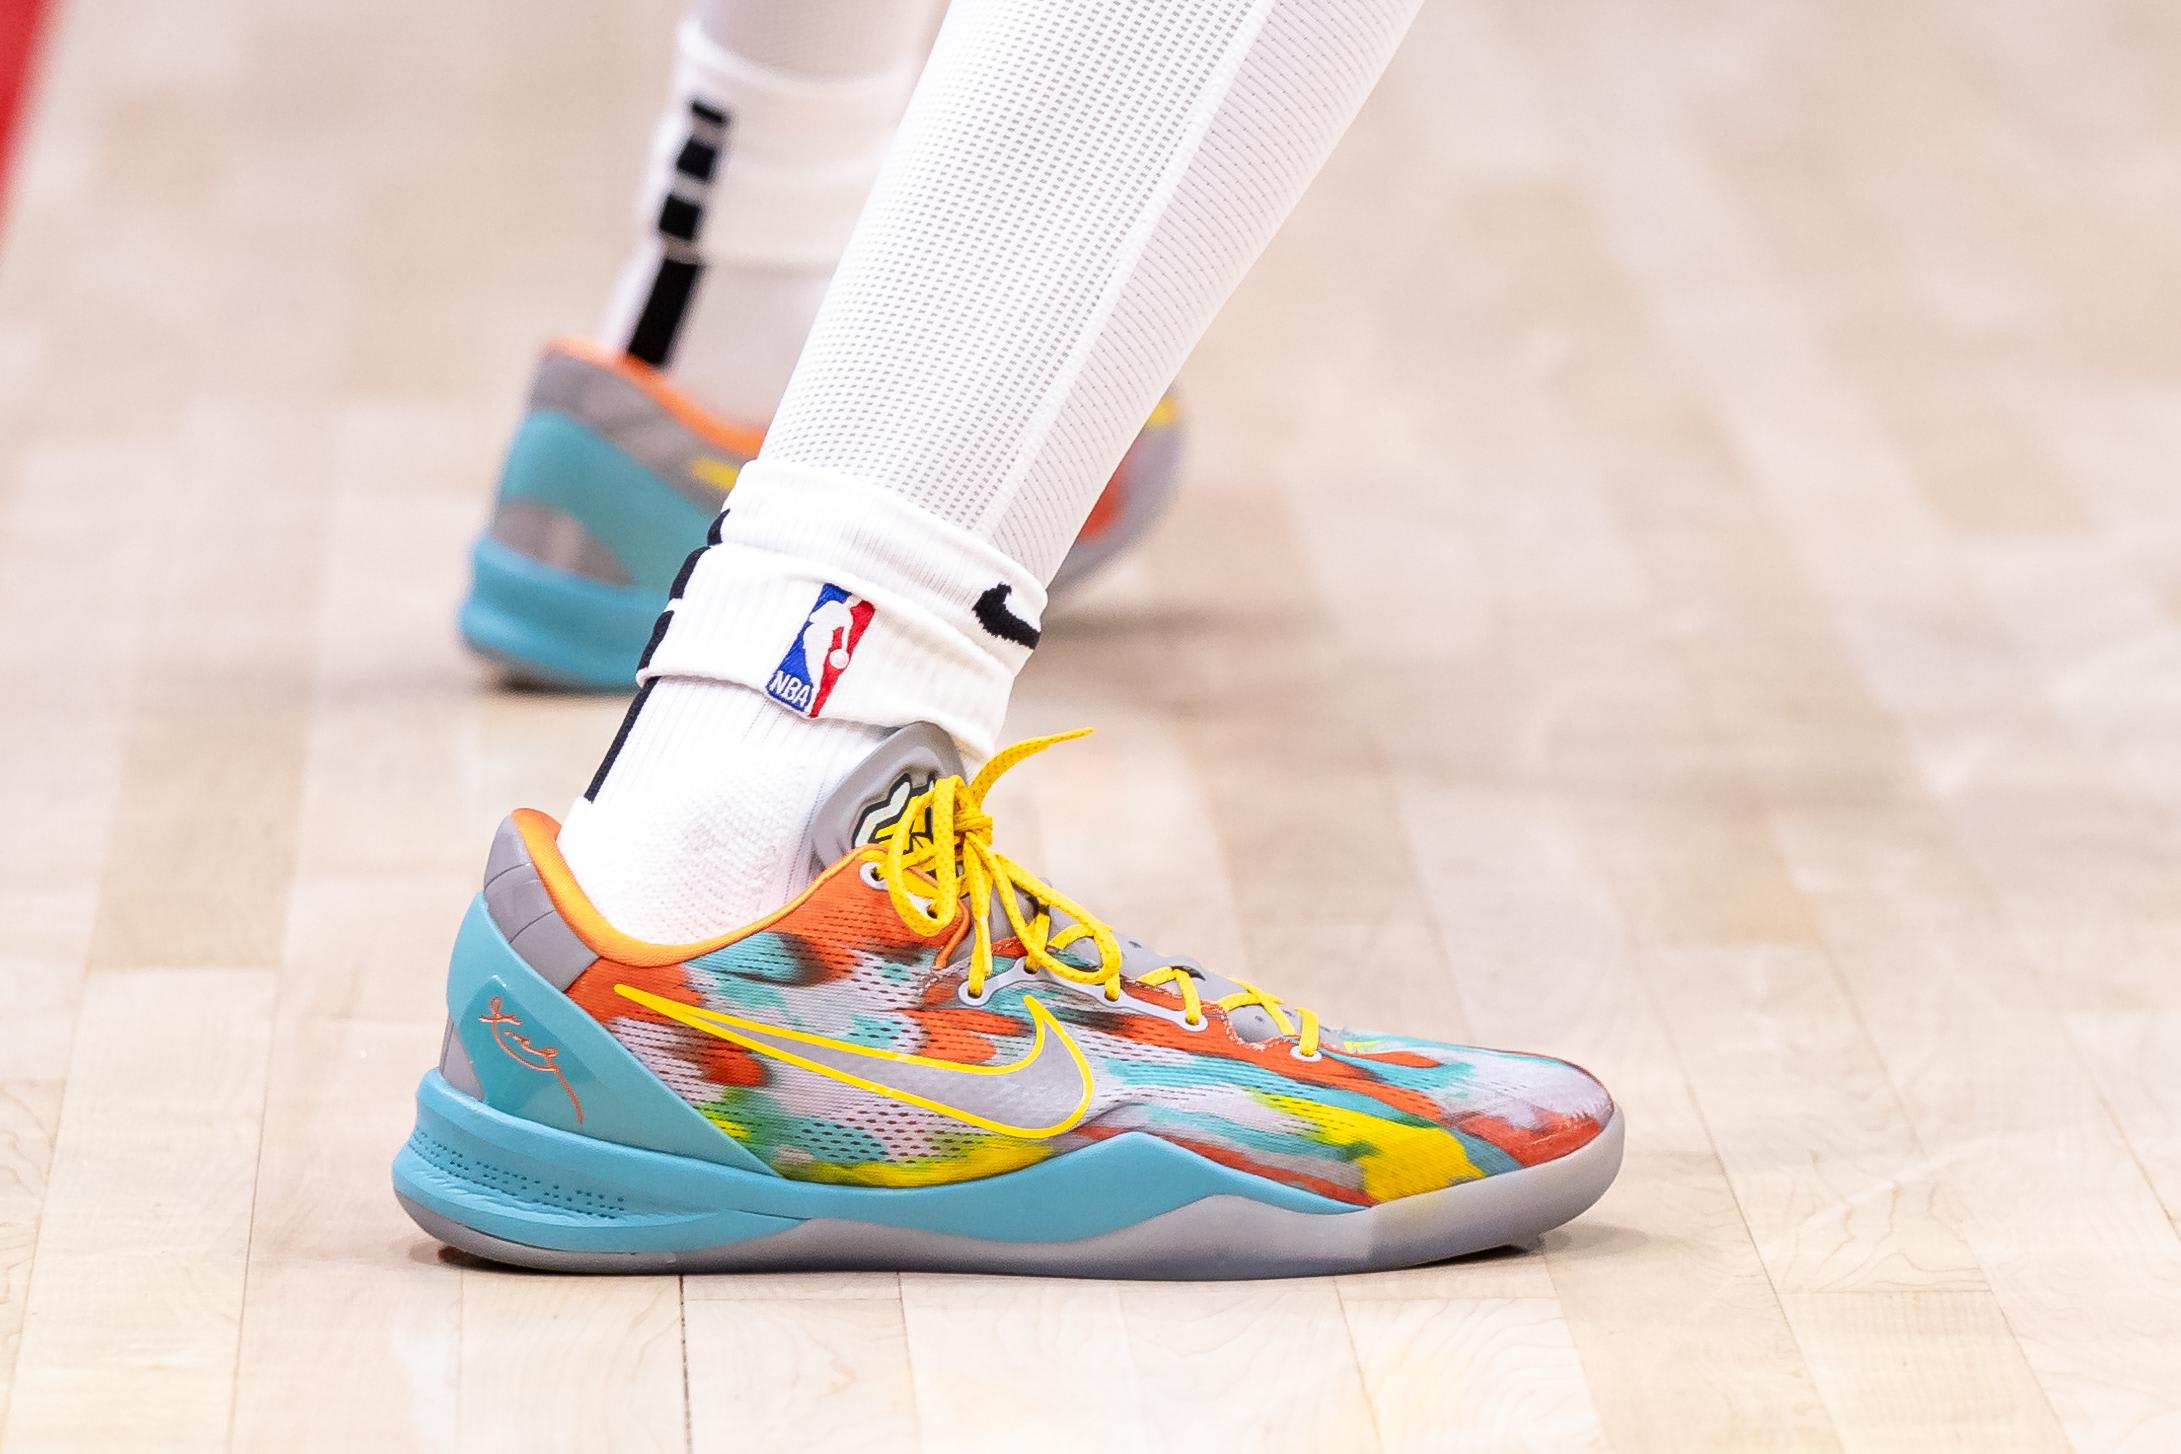 Portland Trail Blazers forward Dalano Banton's blue Nike Kobe sneakers.